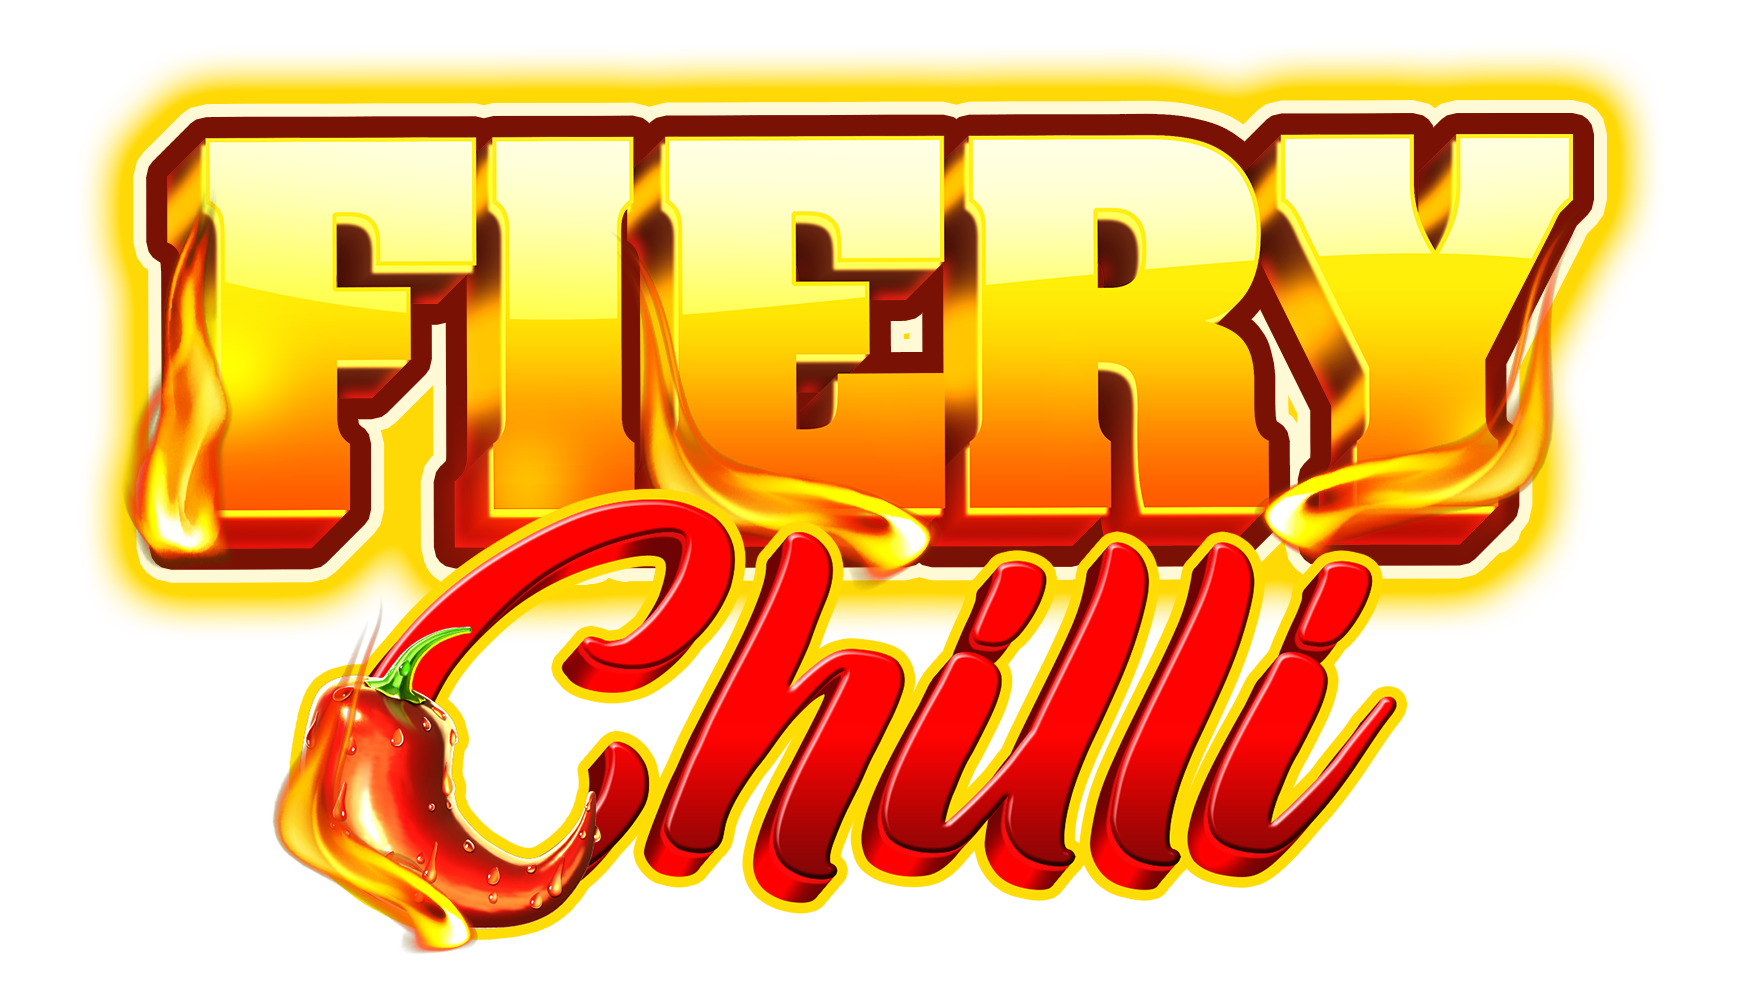 Fiery Chilli